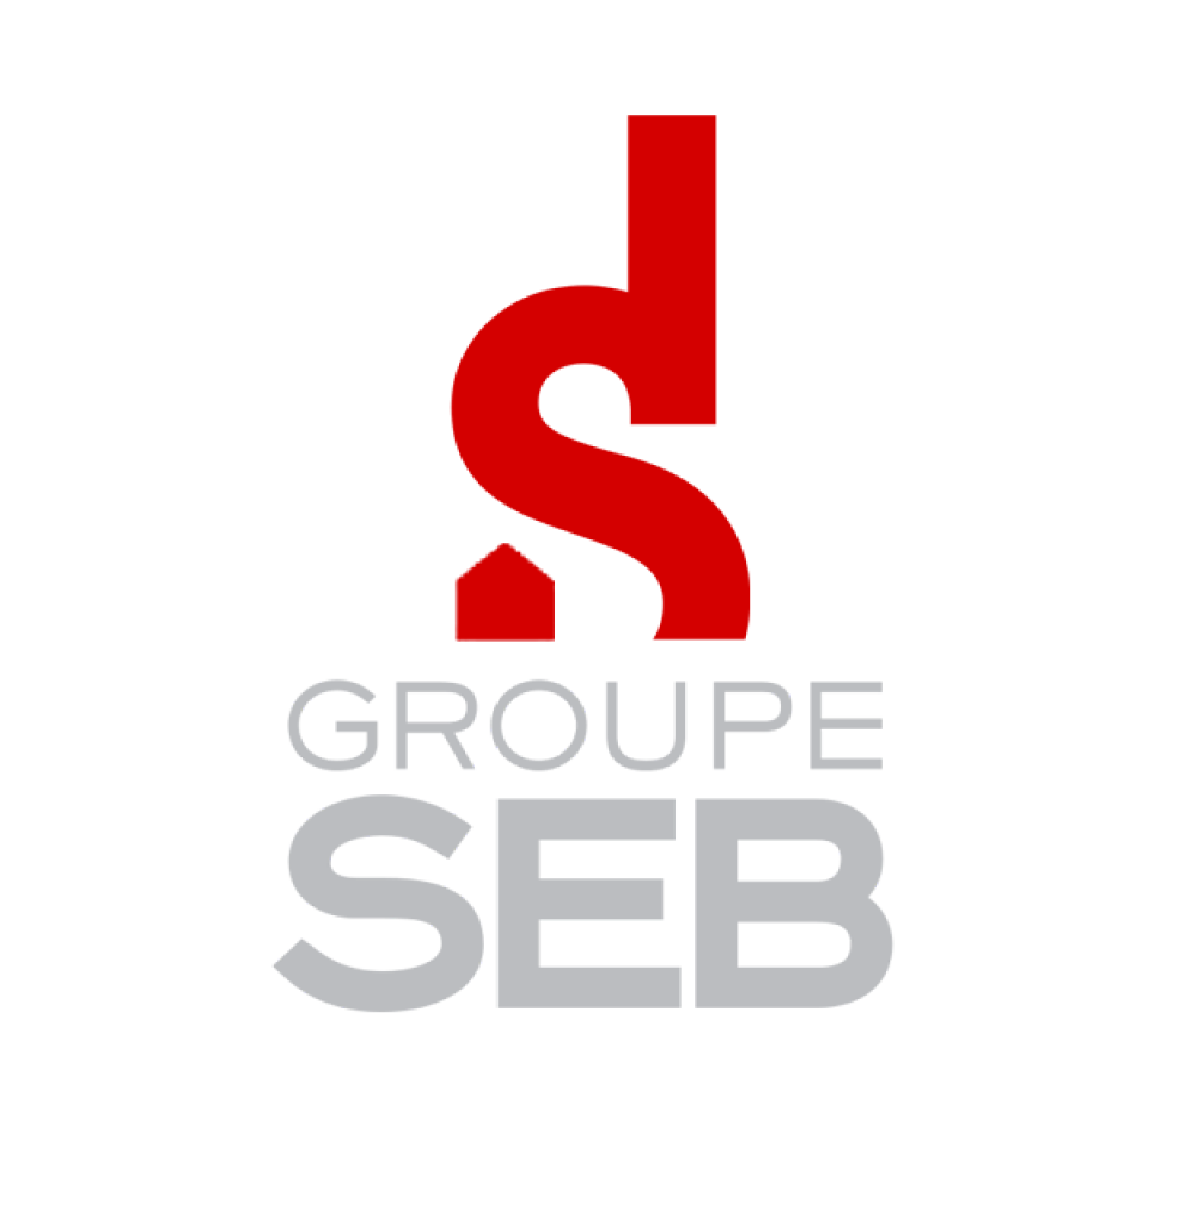 Group Eseb